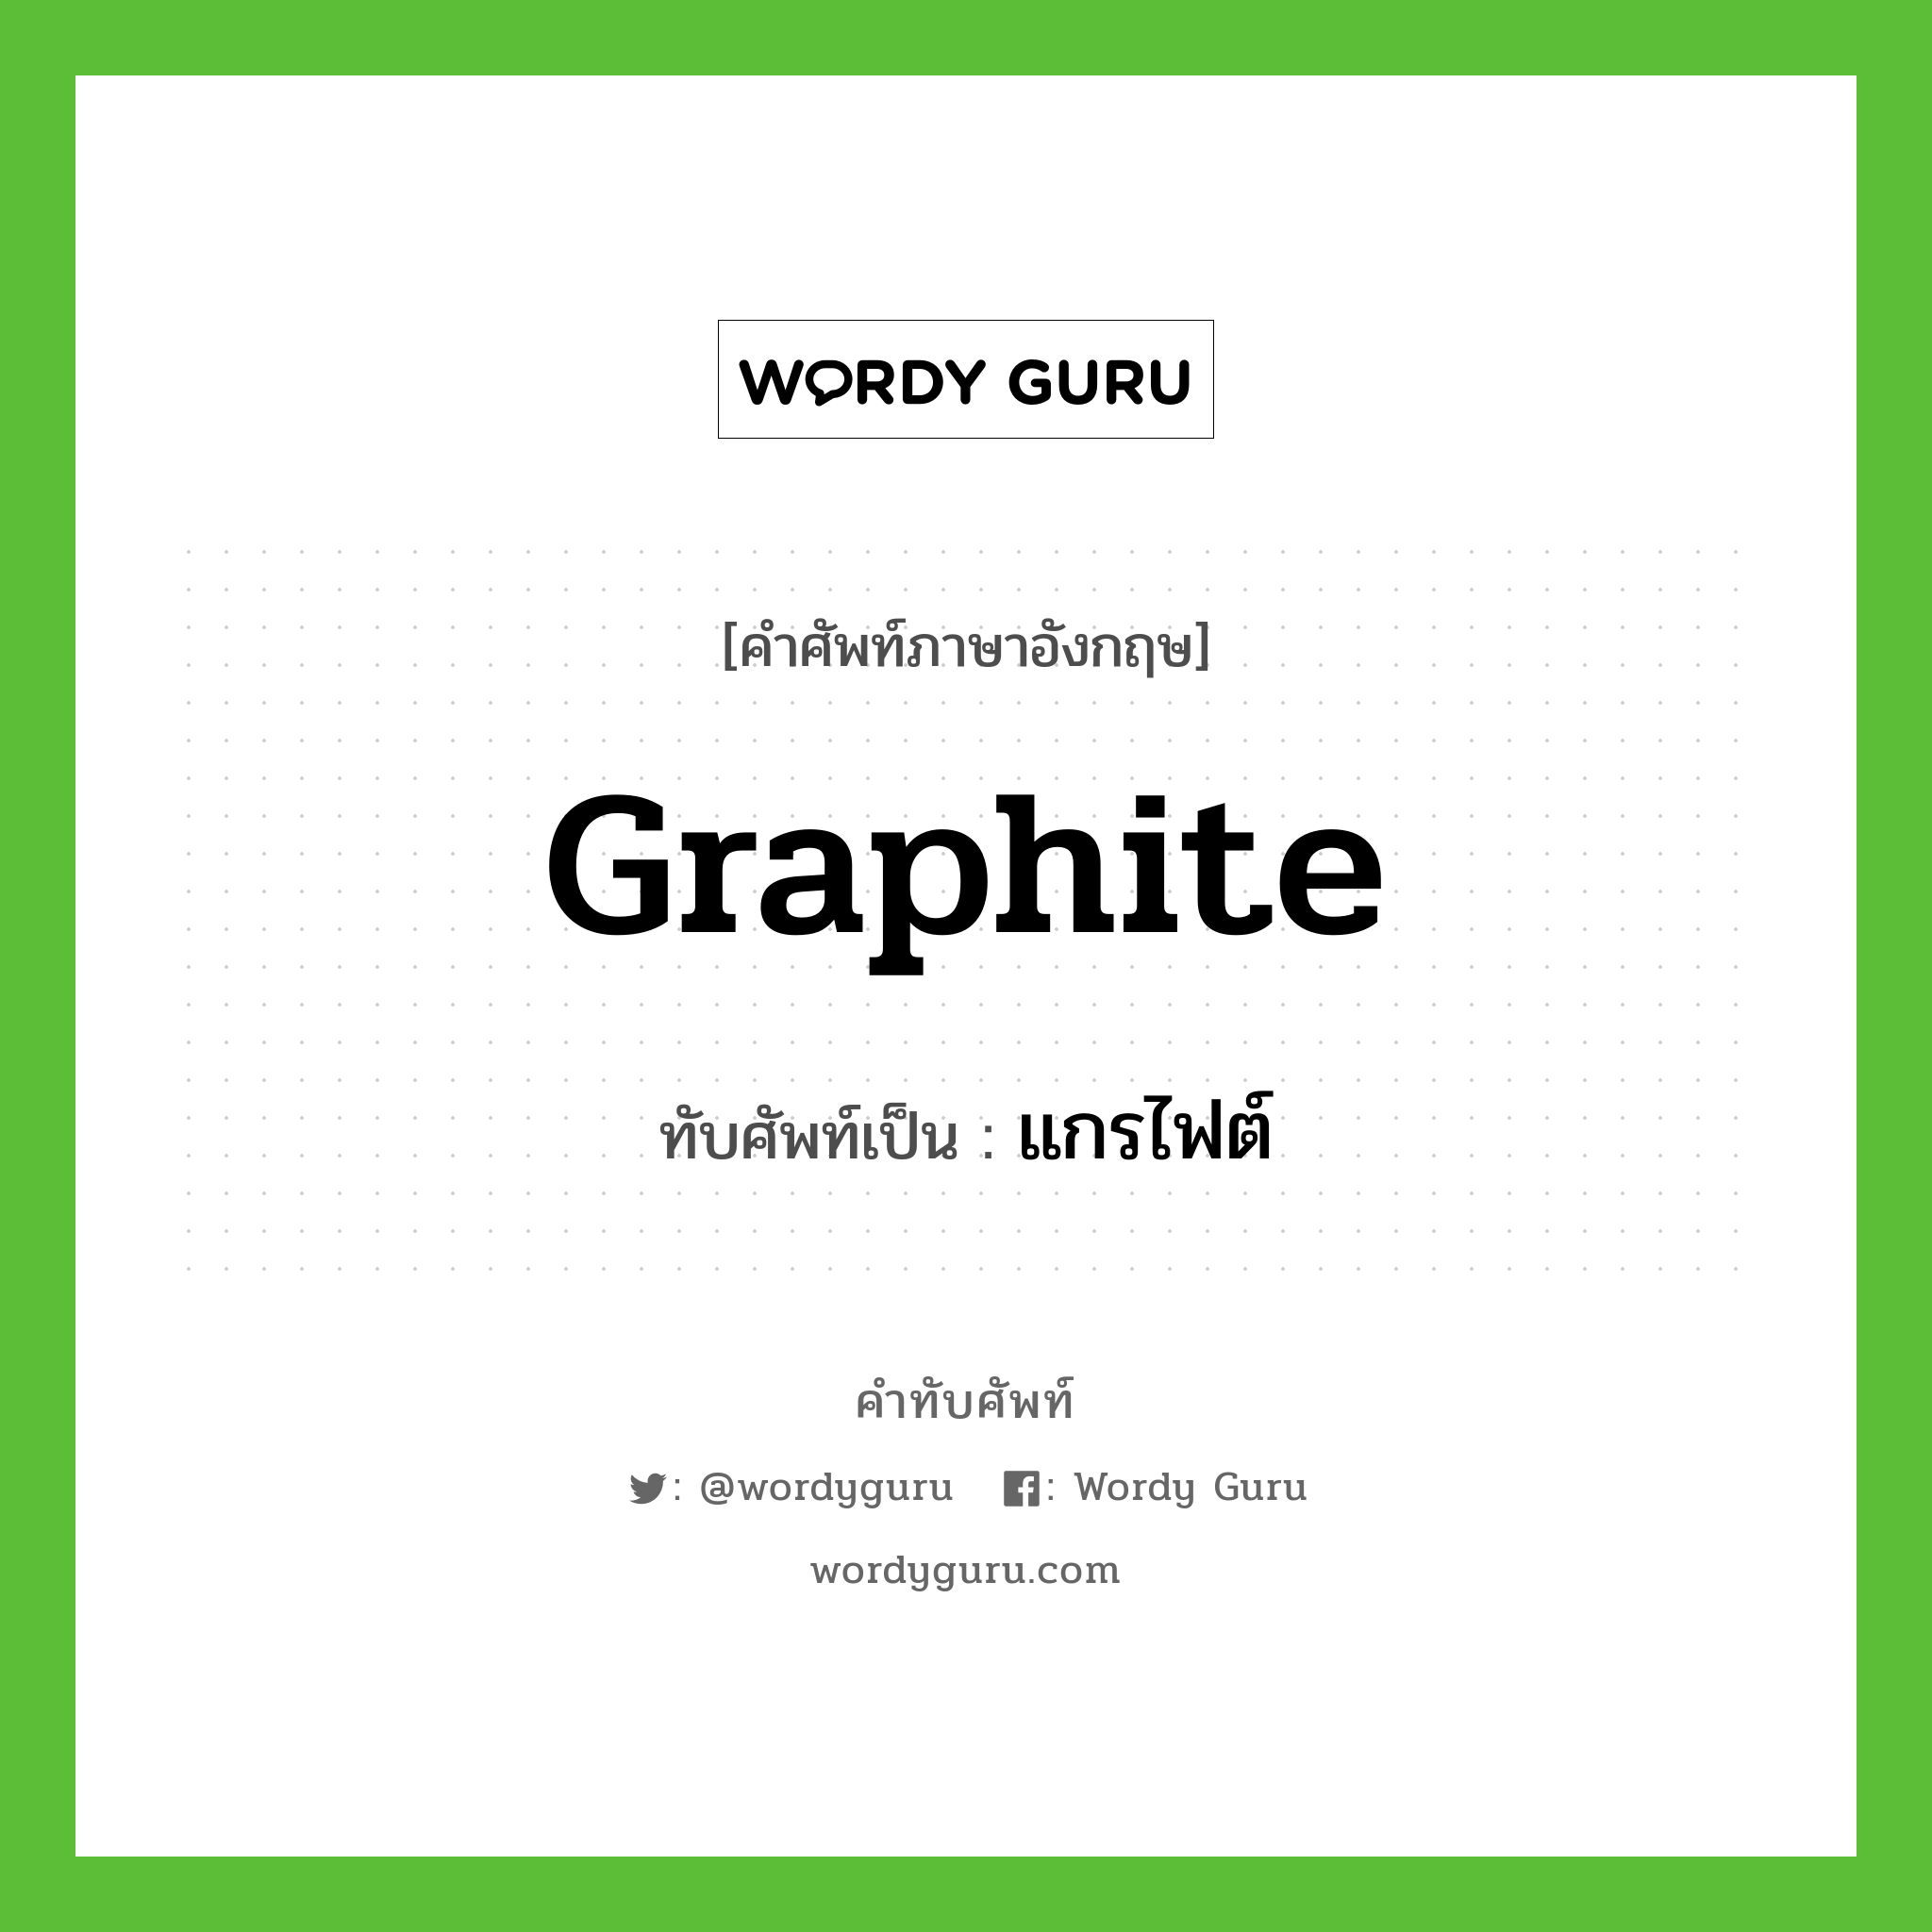 graphite เขียนเป็นคำไทยว่าอะไร?, คำศัพท์ภาษาอังกฤษ graphite ทับศัพท์เป็น แกรไฟต์